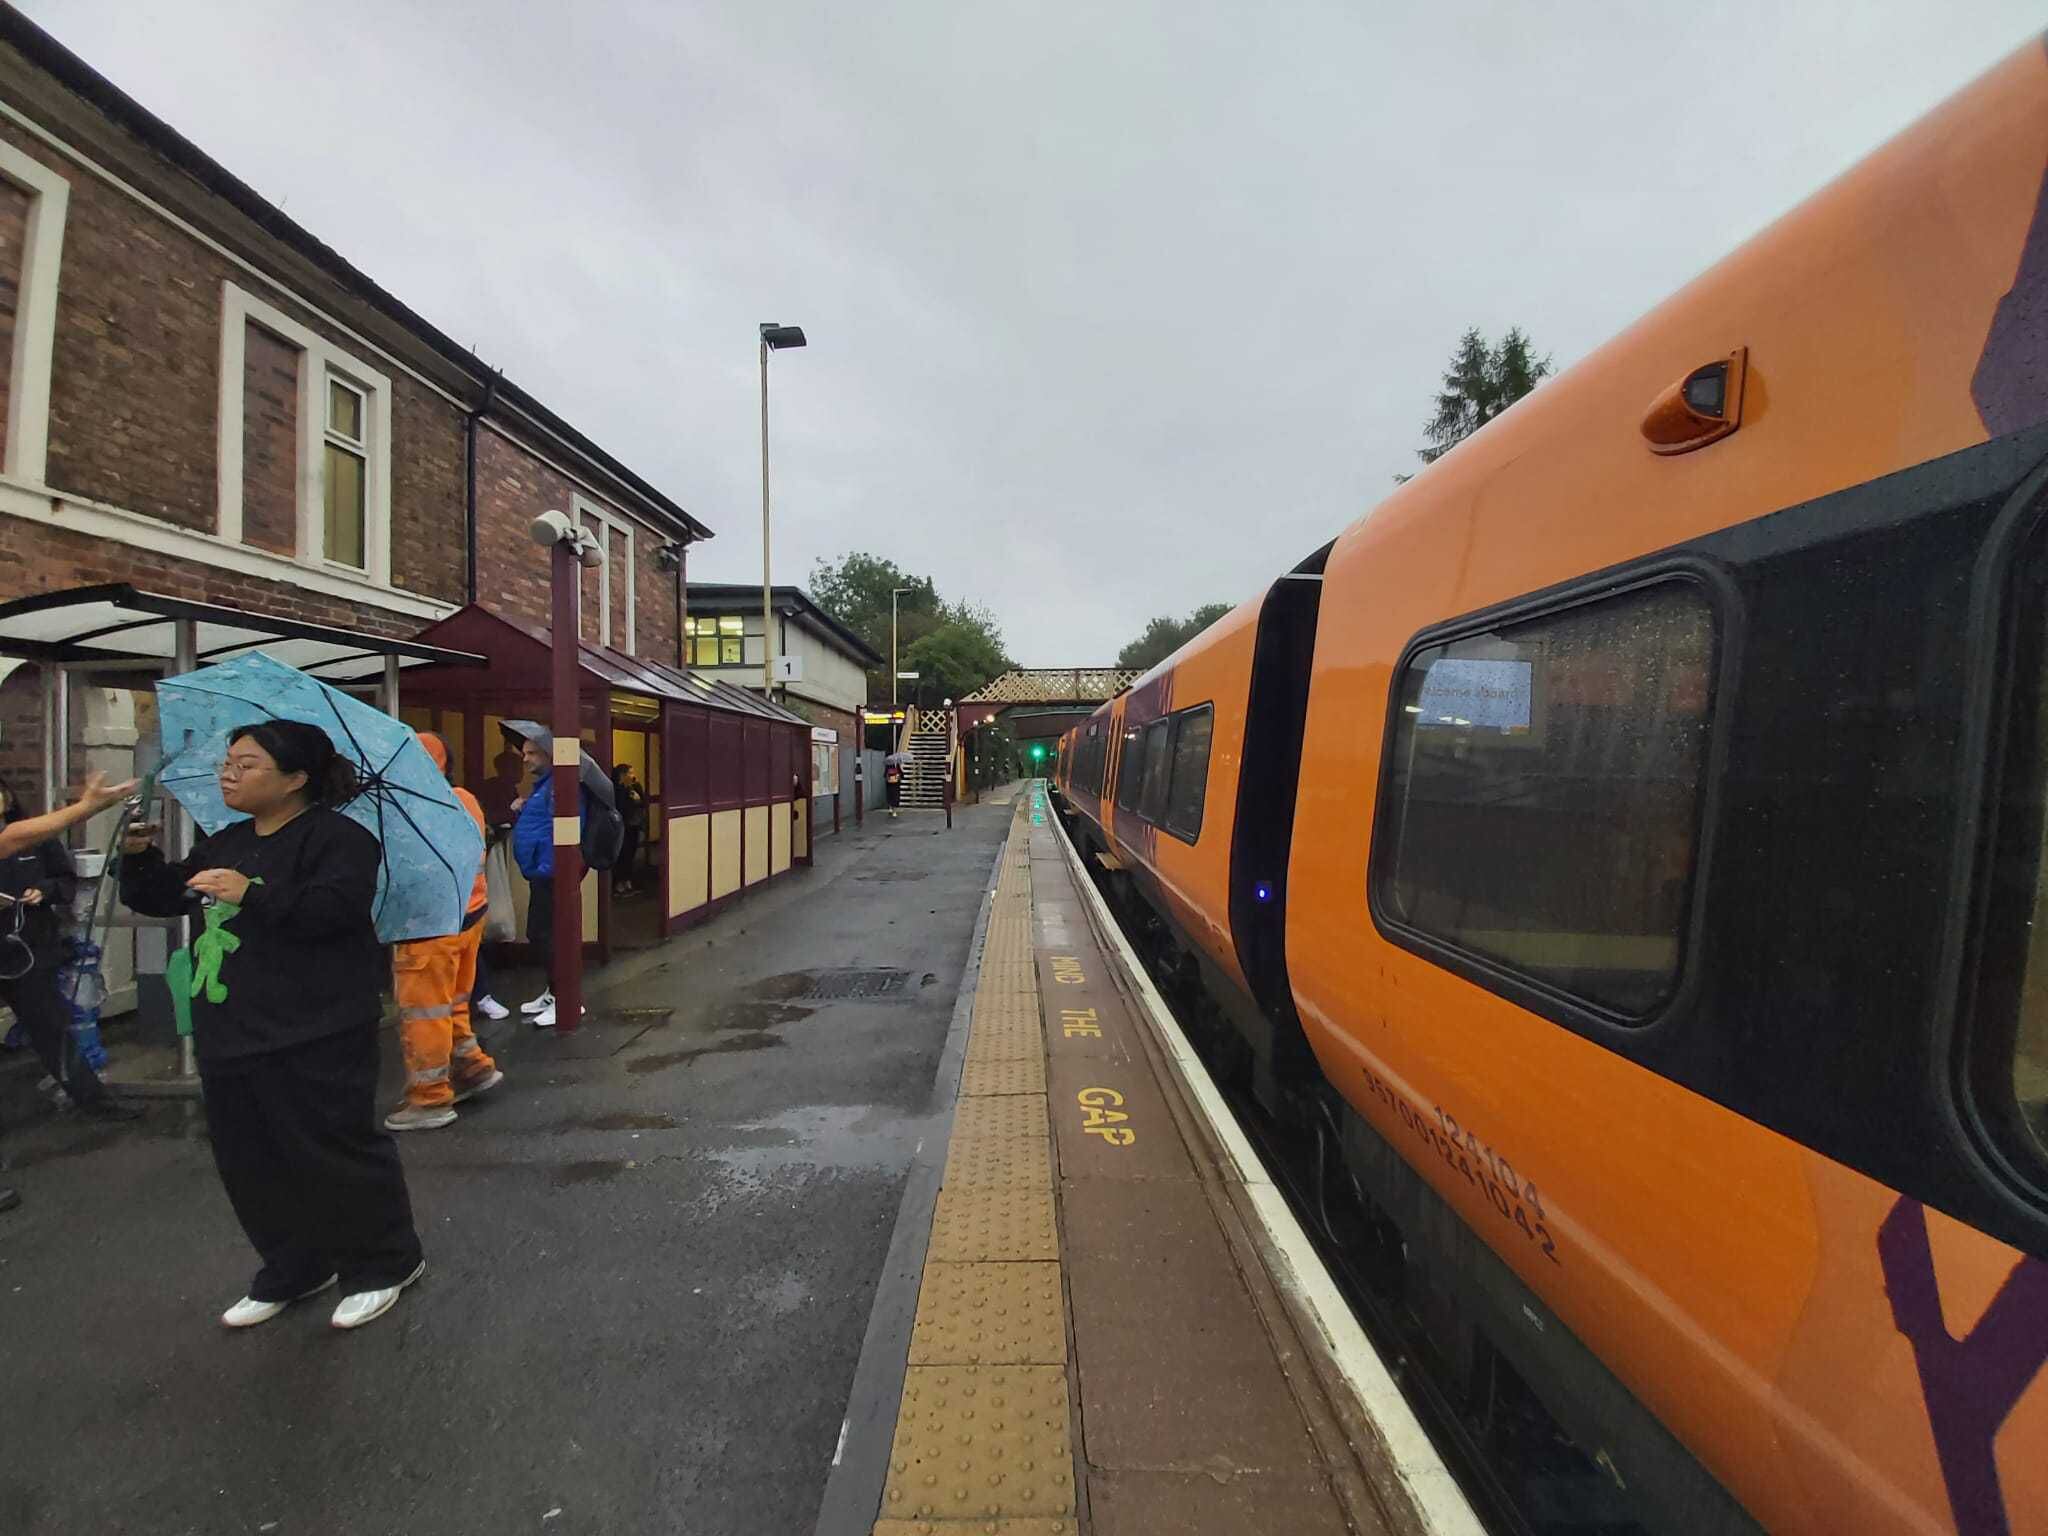 Rail delays between Shrewsbury and Wolverhampton due to broken down train